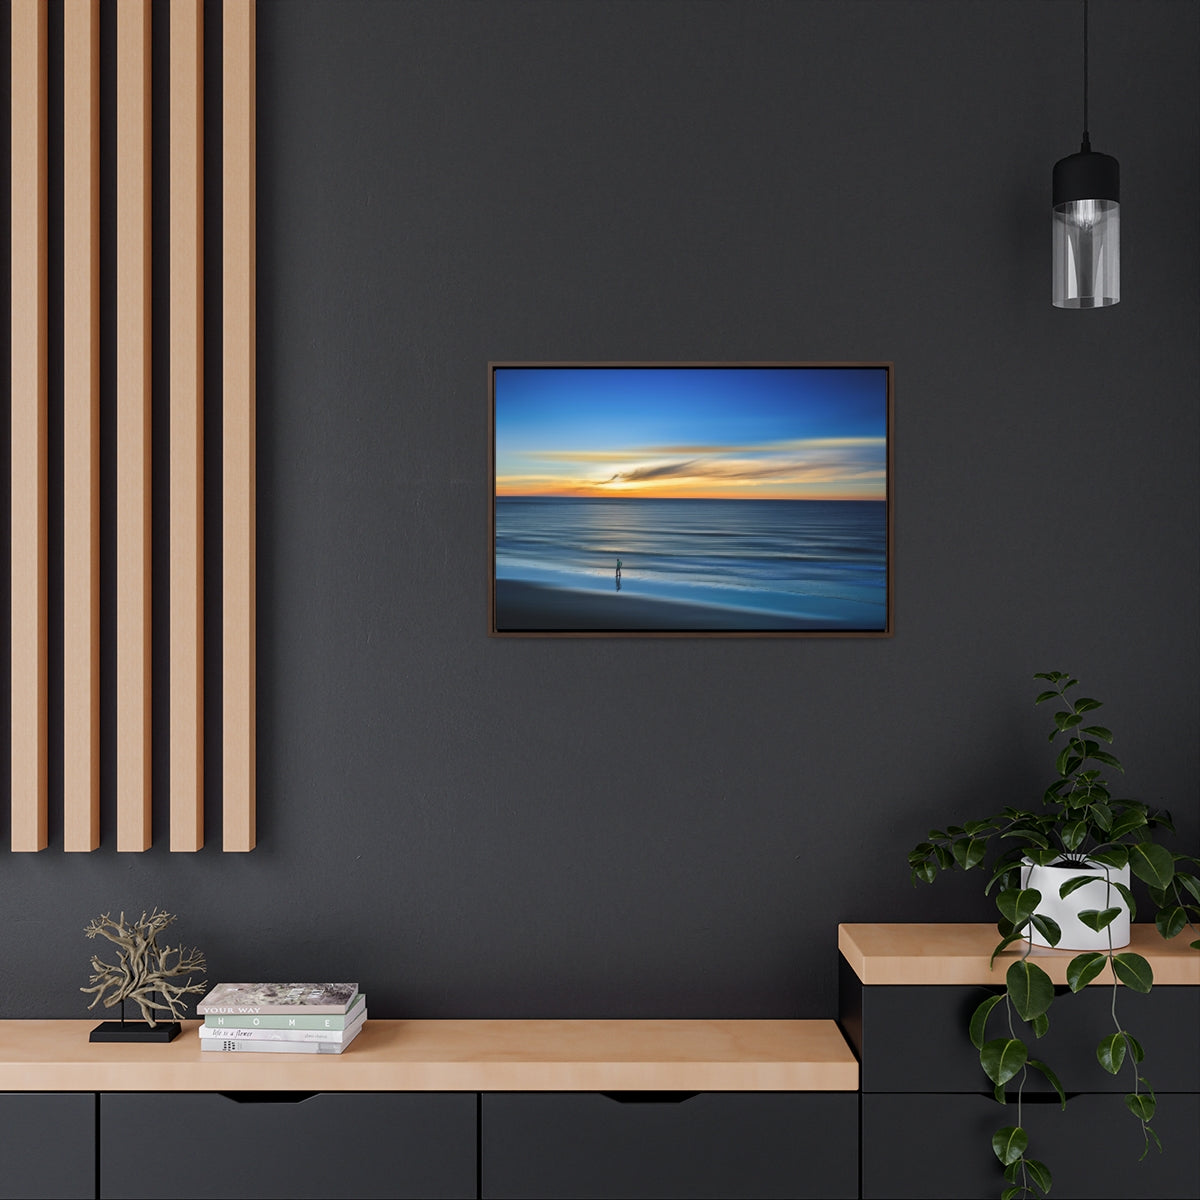 Beach Sunset Canvas Print